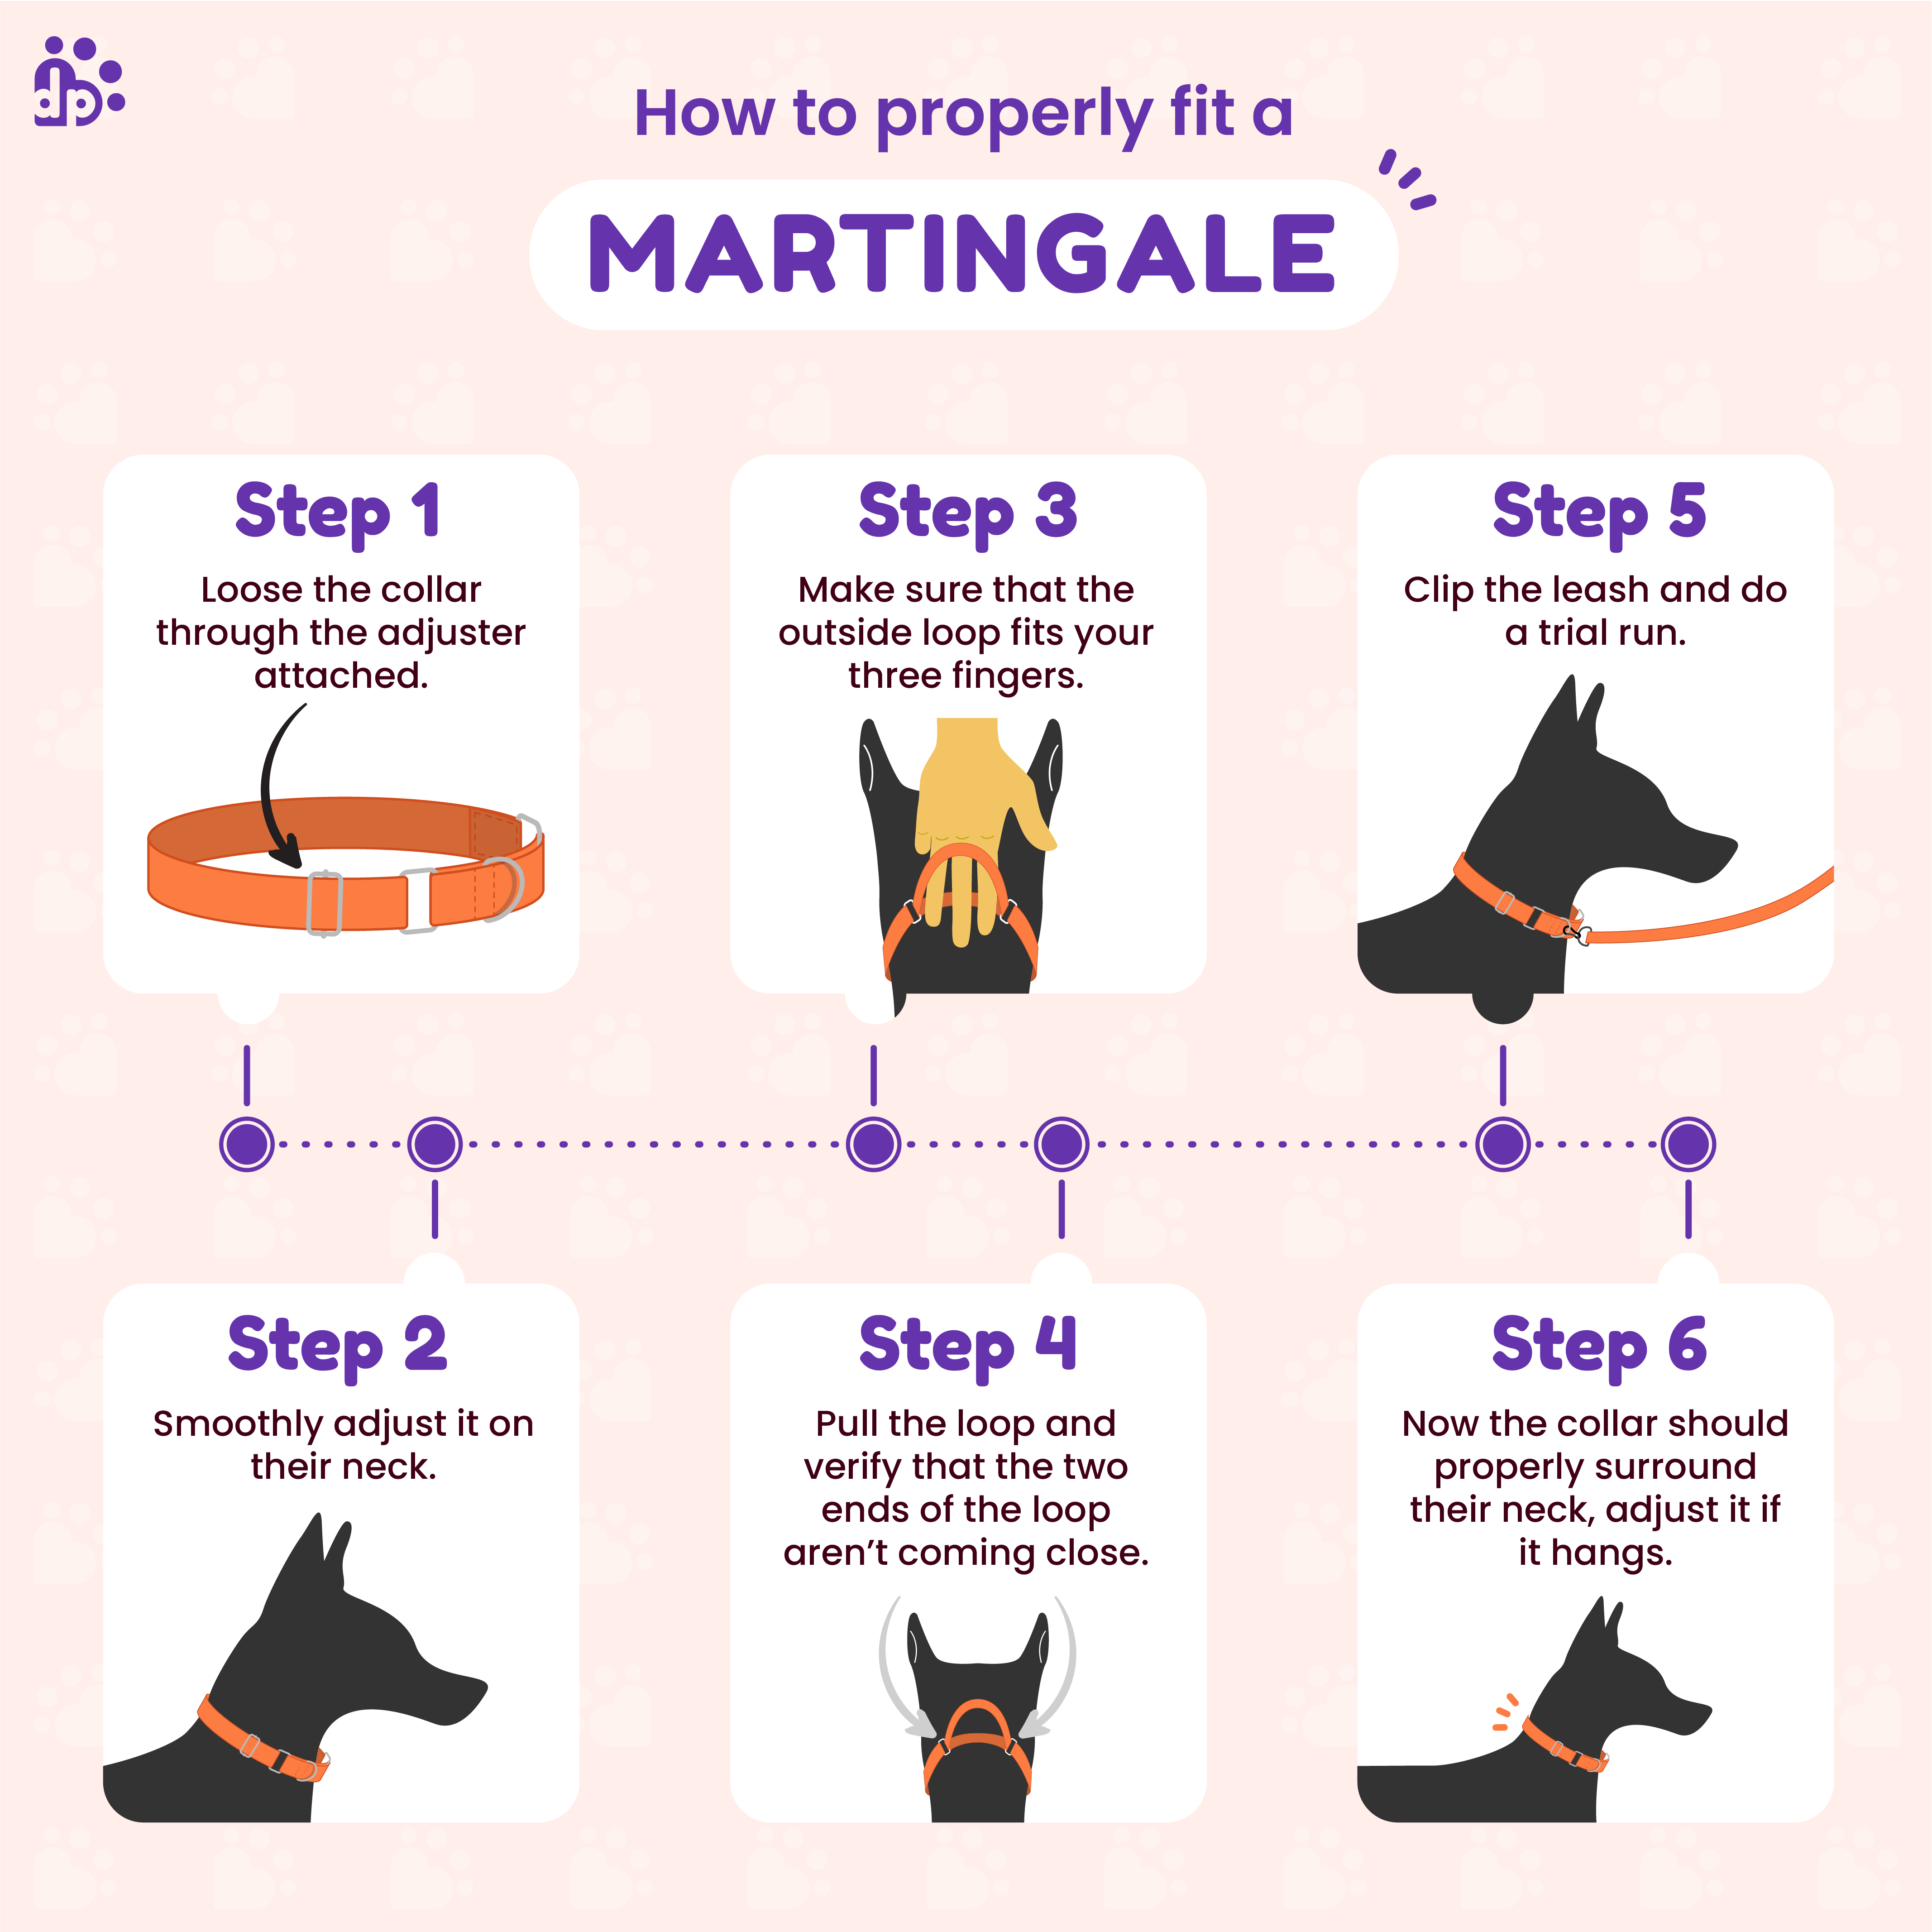 Dear Pet Double Trouble Martingale Blue & Pink Dog Collar